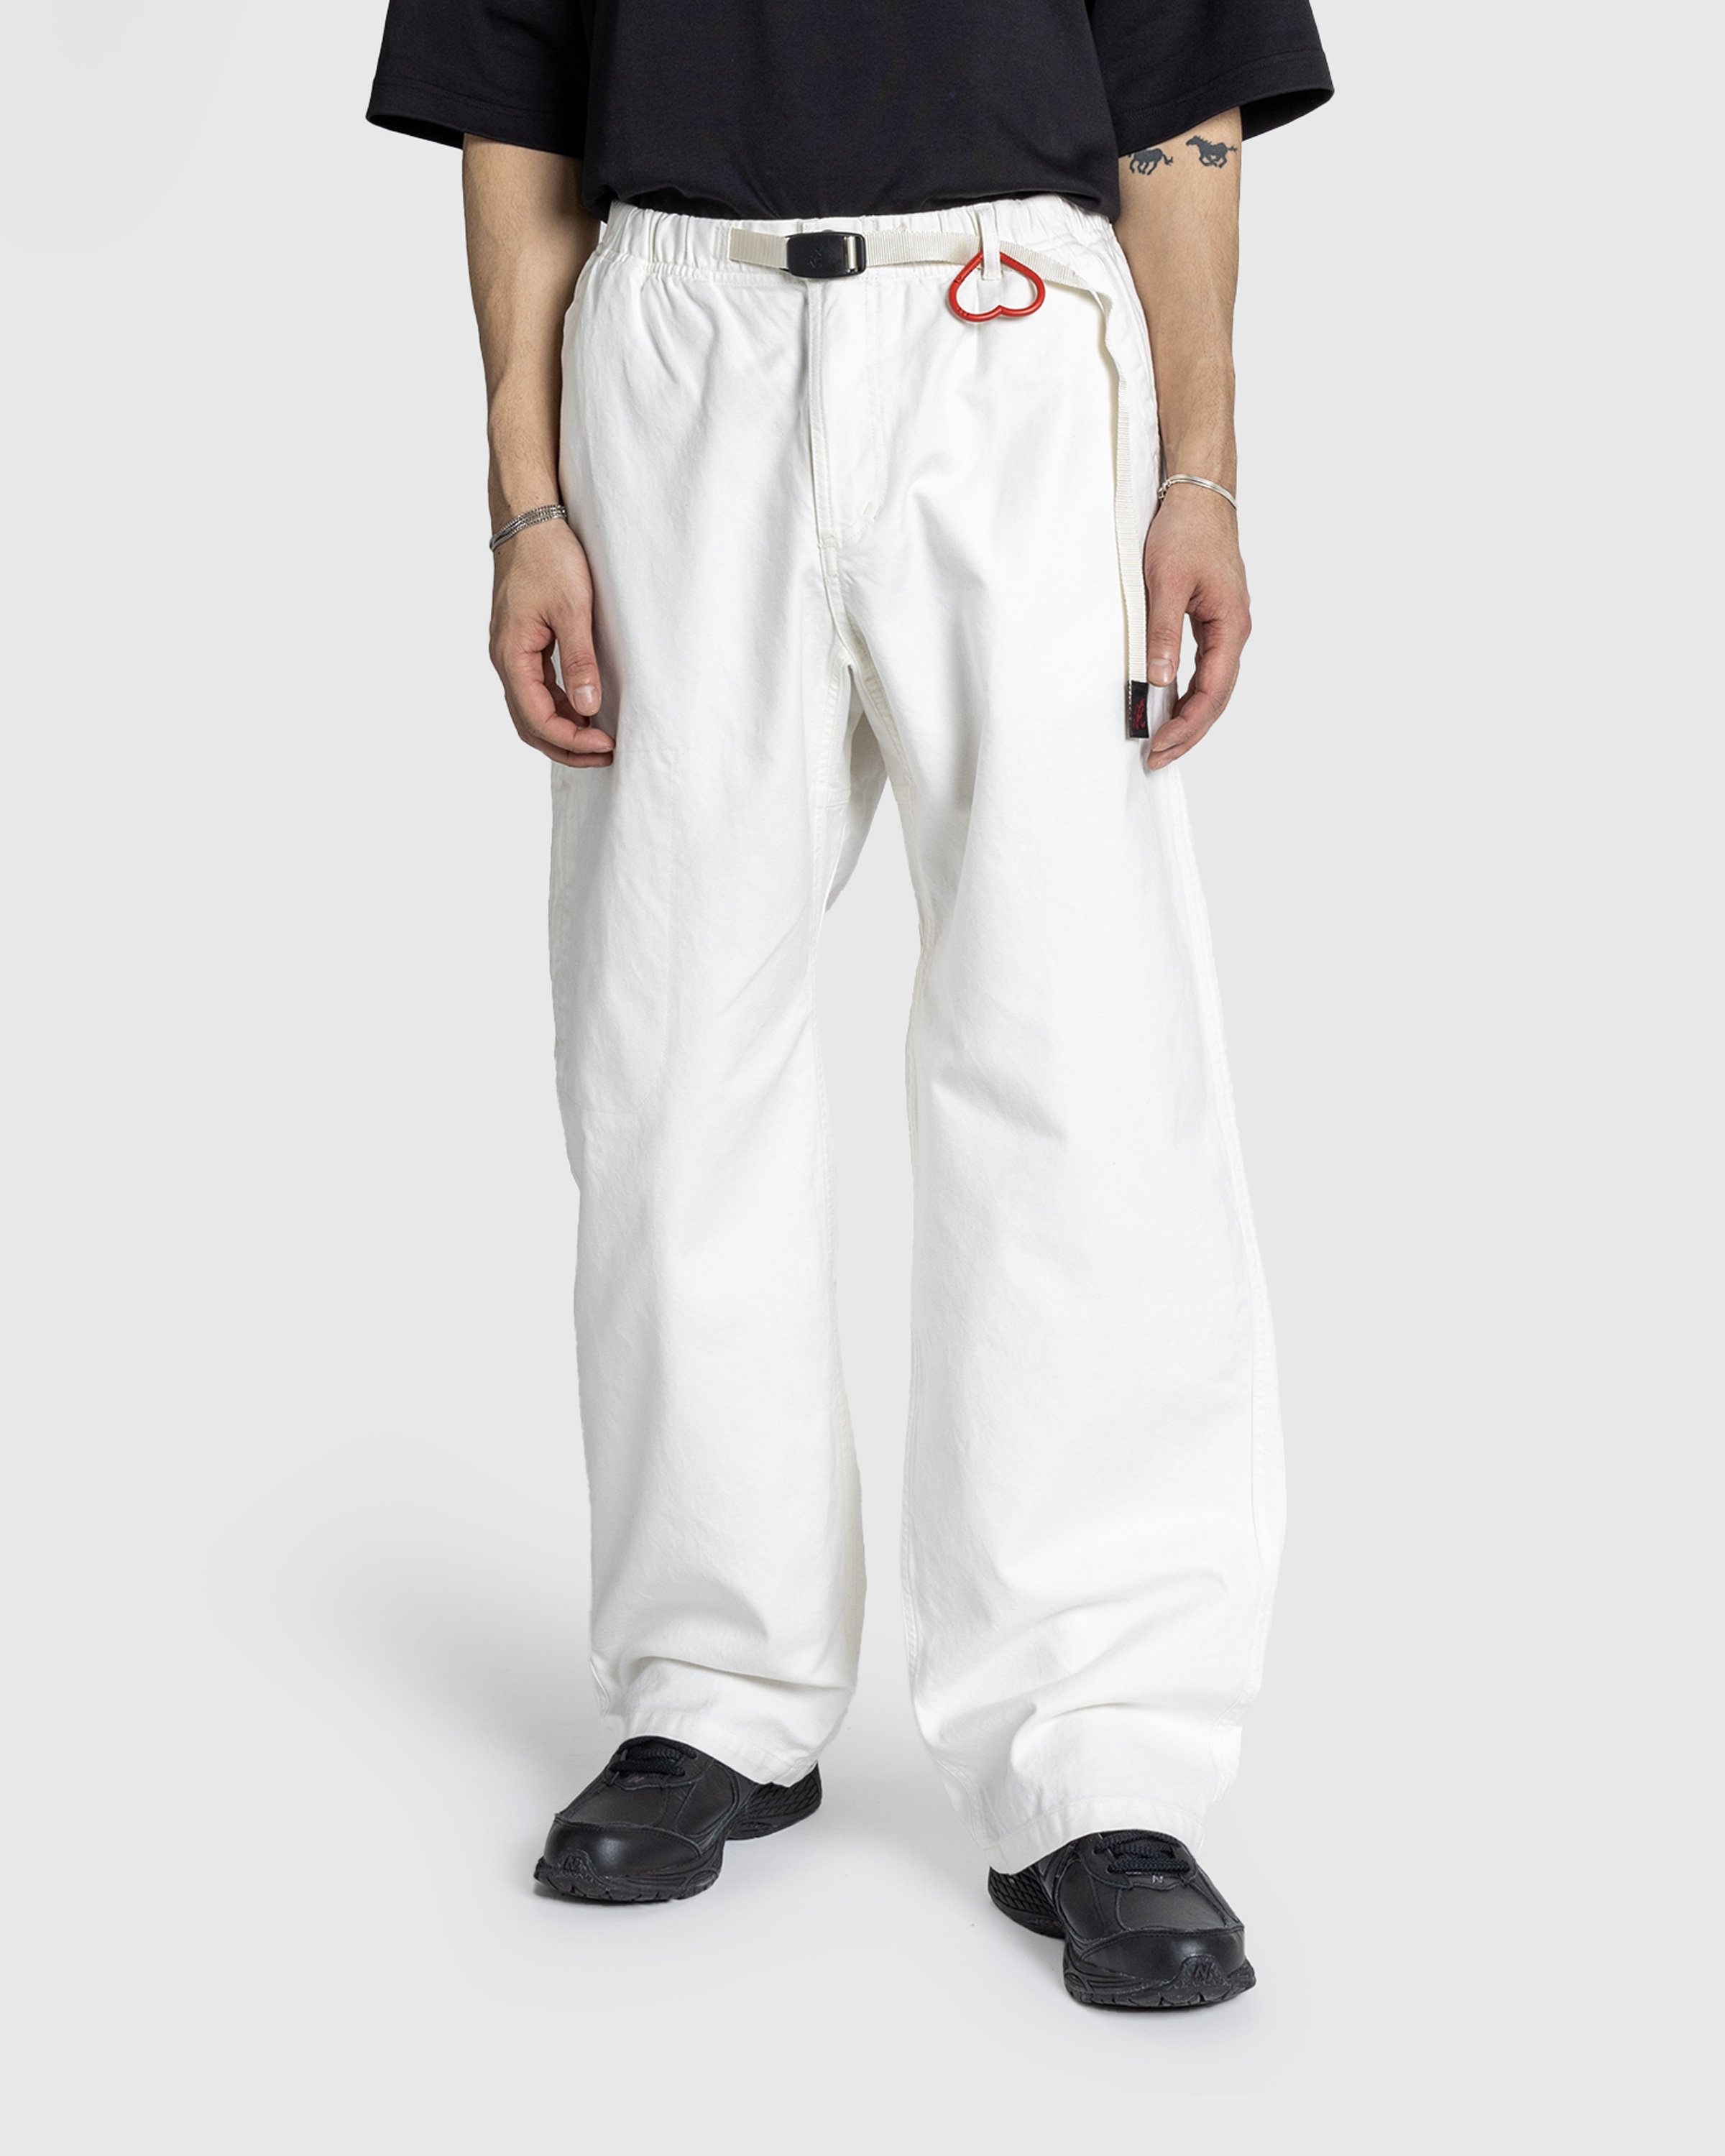 Gramicci - GROUND UP PANT WAX - Clothing - White - Image 2